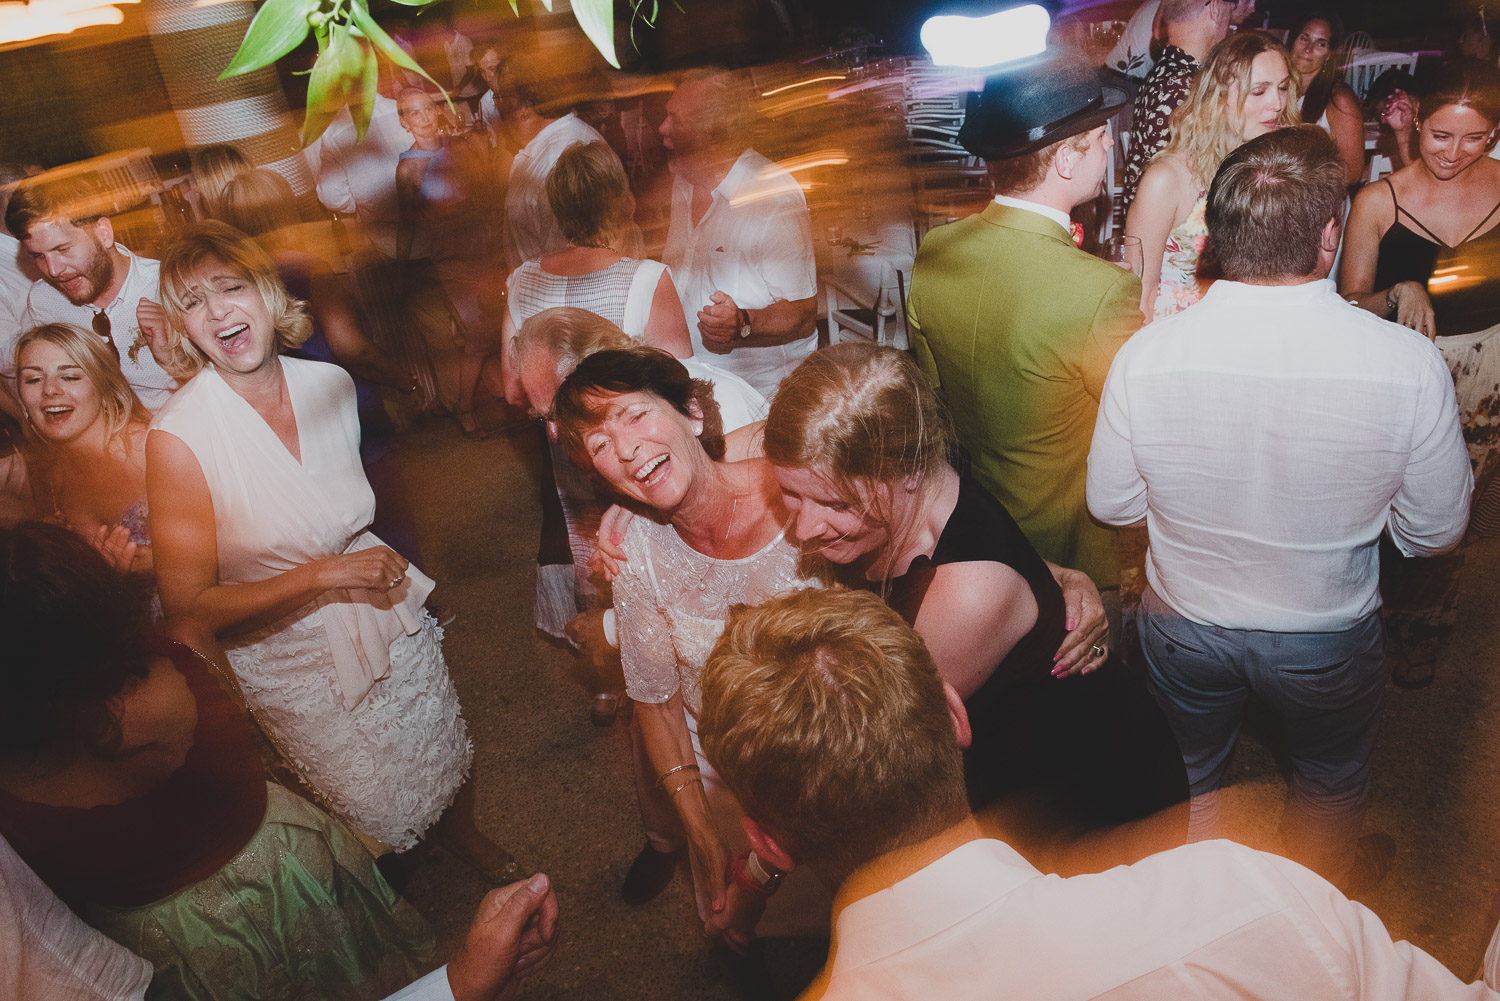 Wedding photographer Mykonos: dancing and singing at Elia during Mykonos wedding.